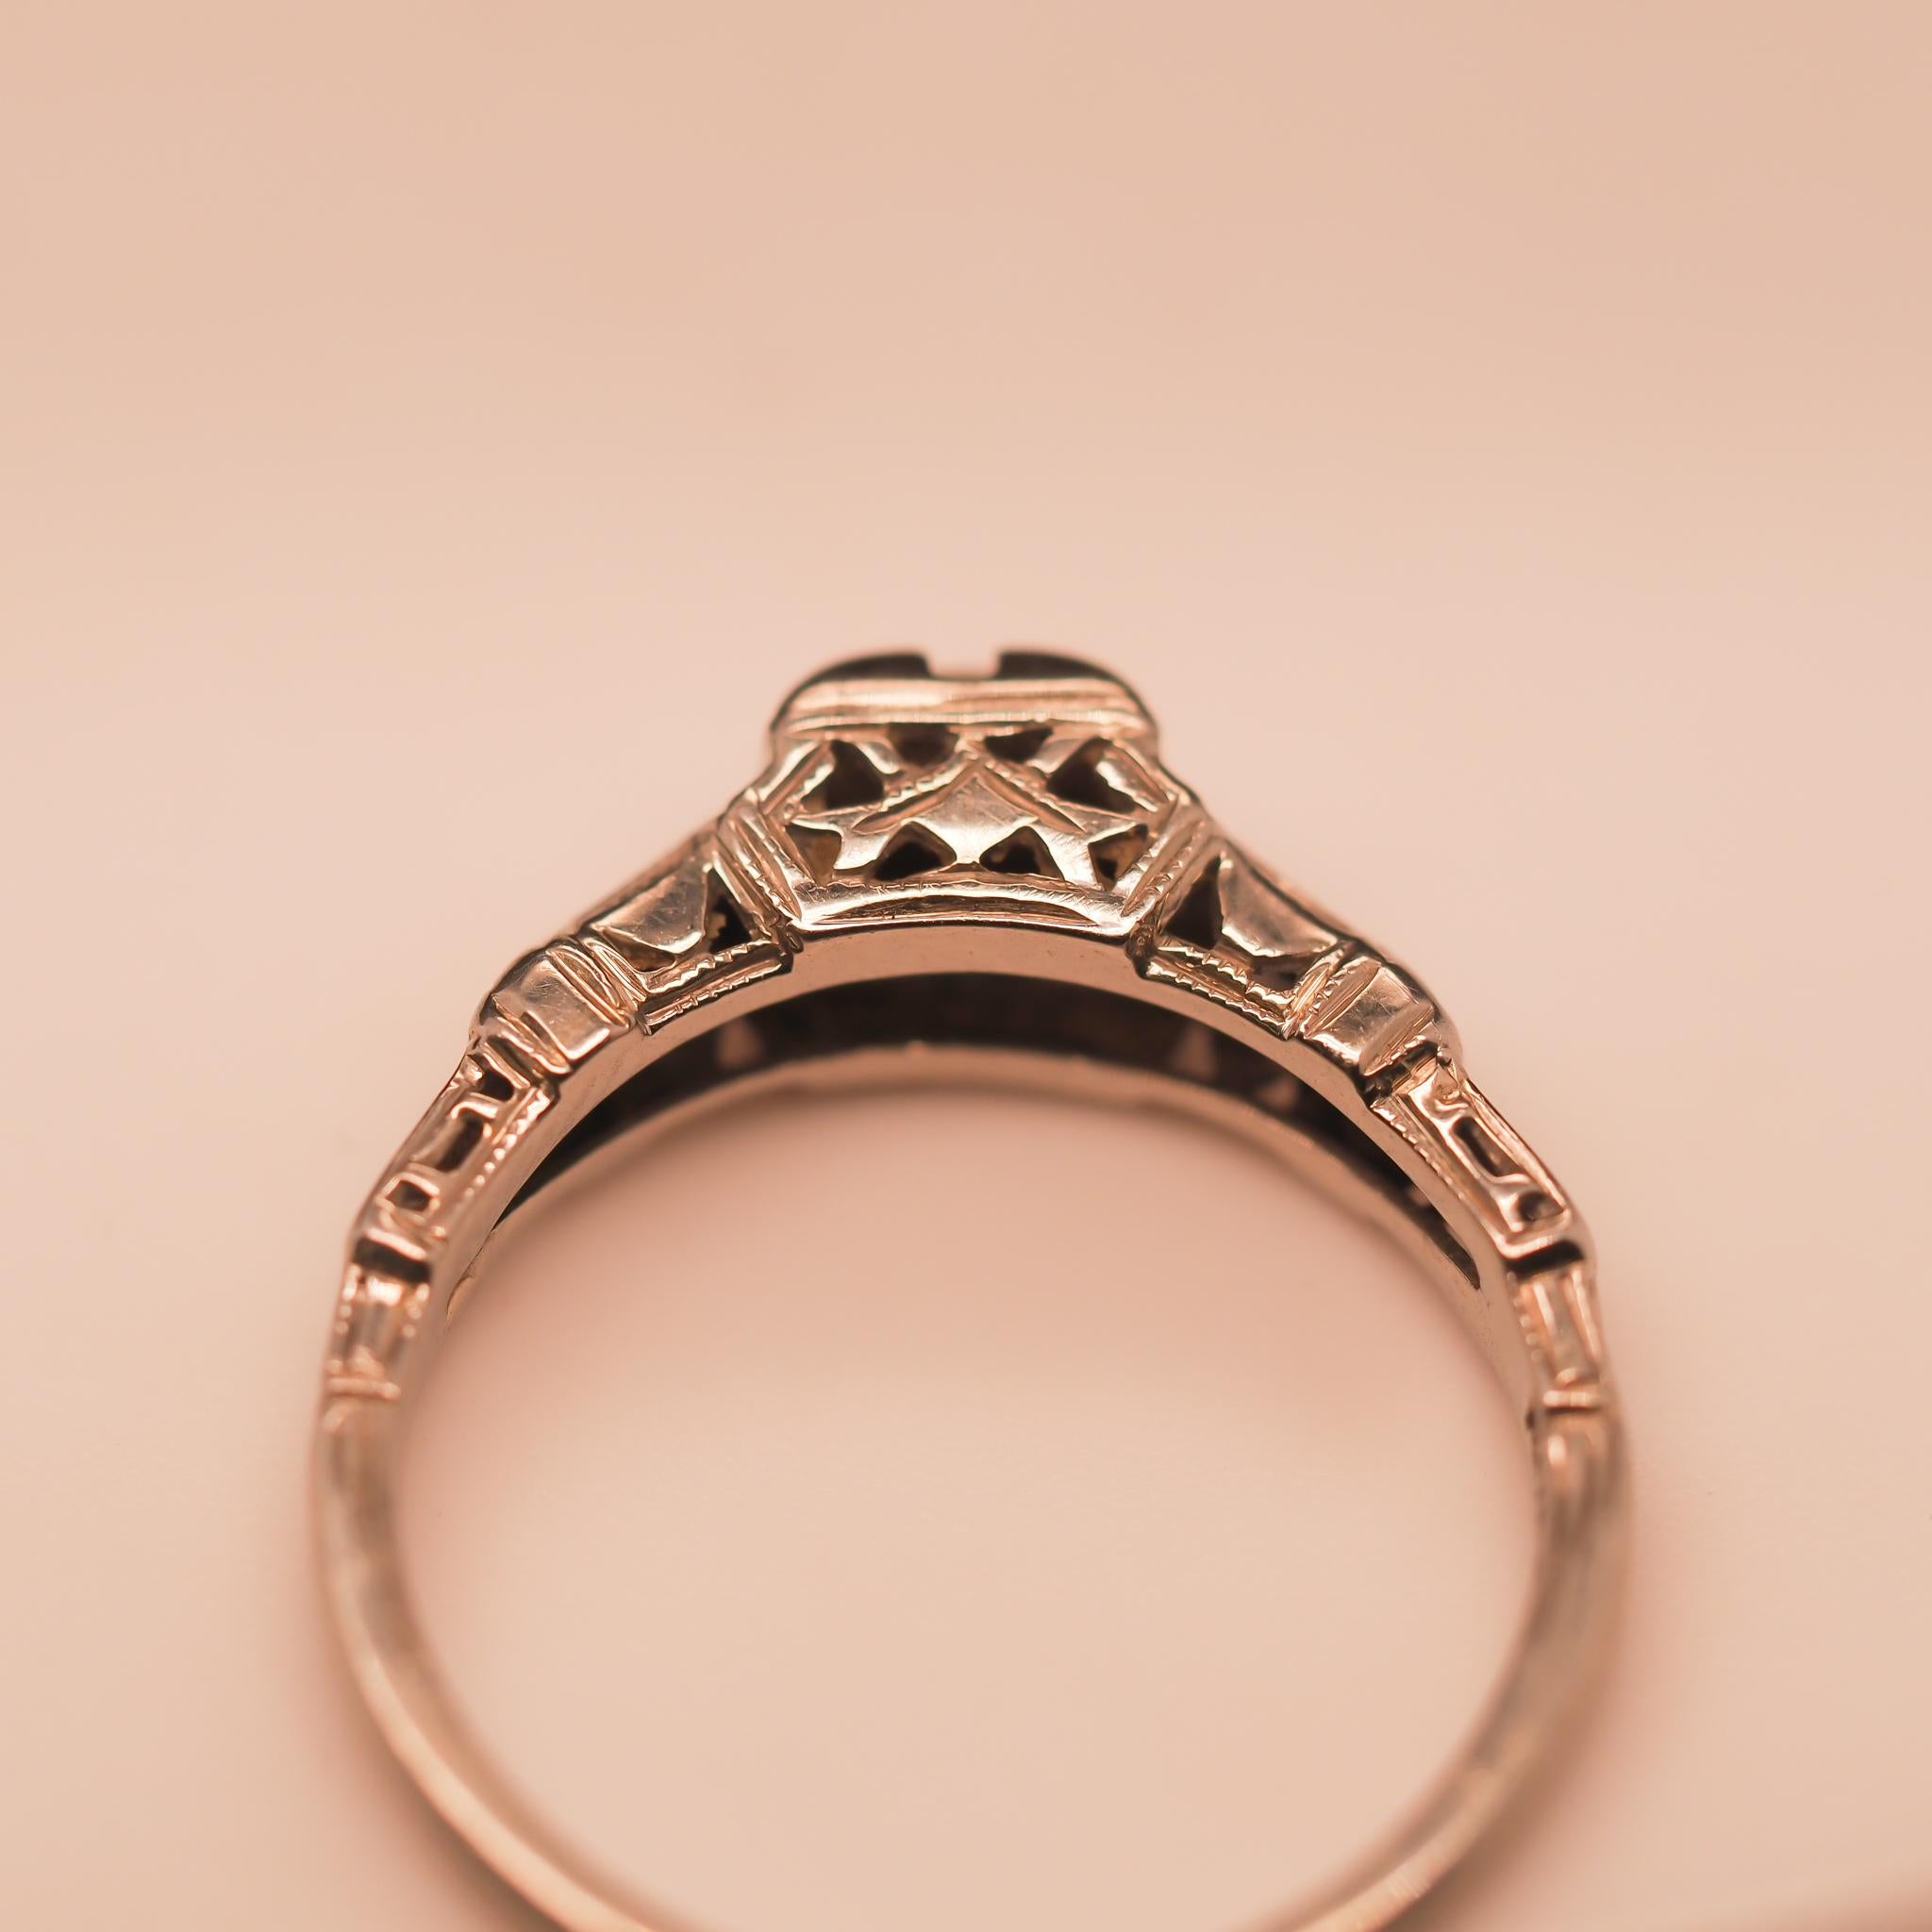 Old European Cut Circa 1930s 18K White Gold “Romance” Diamond Filigree Ring For Sale